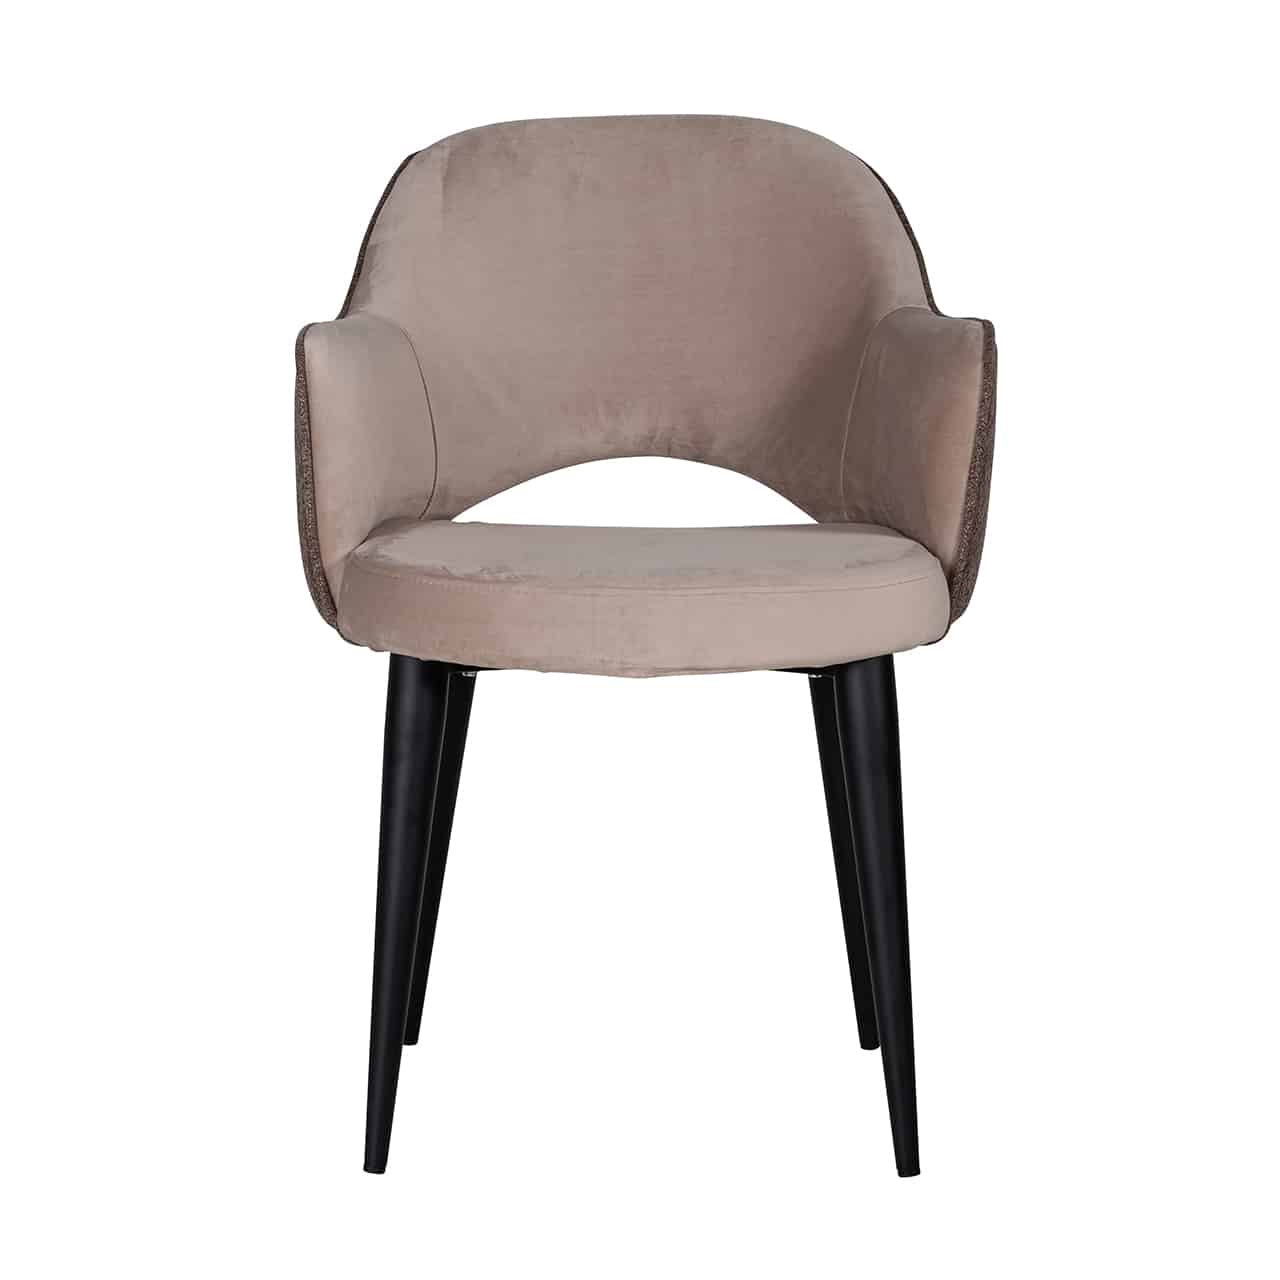 Arm chair Giovanna feather stone / stone velvet fire retardas4483-fr-feather-stonerichmond